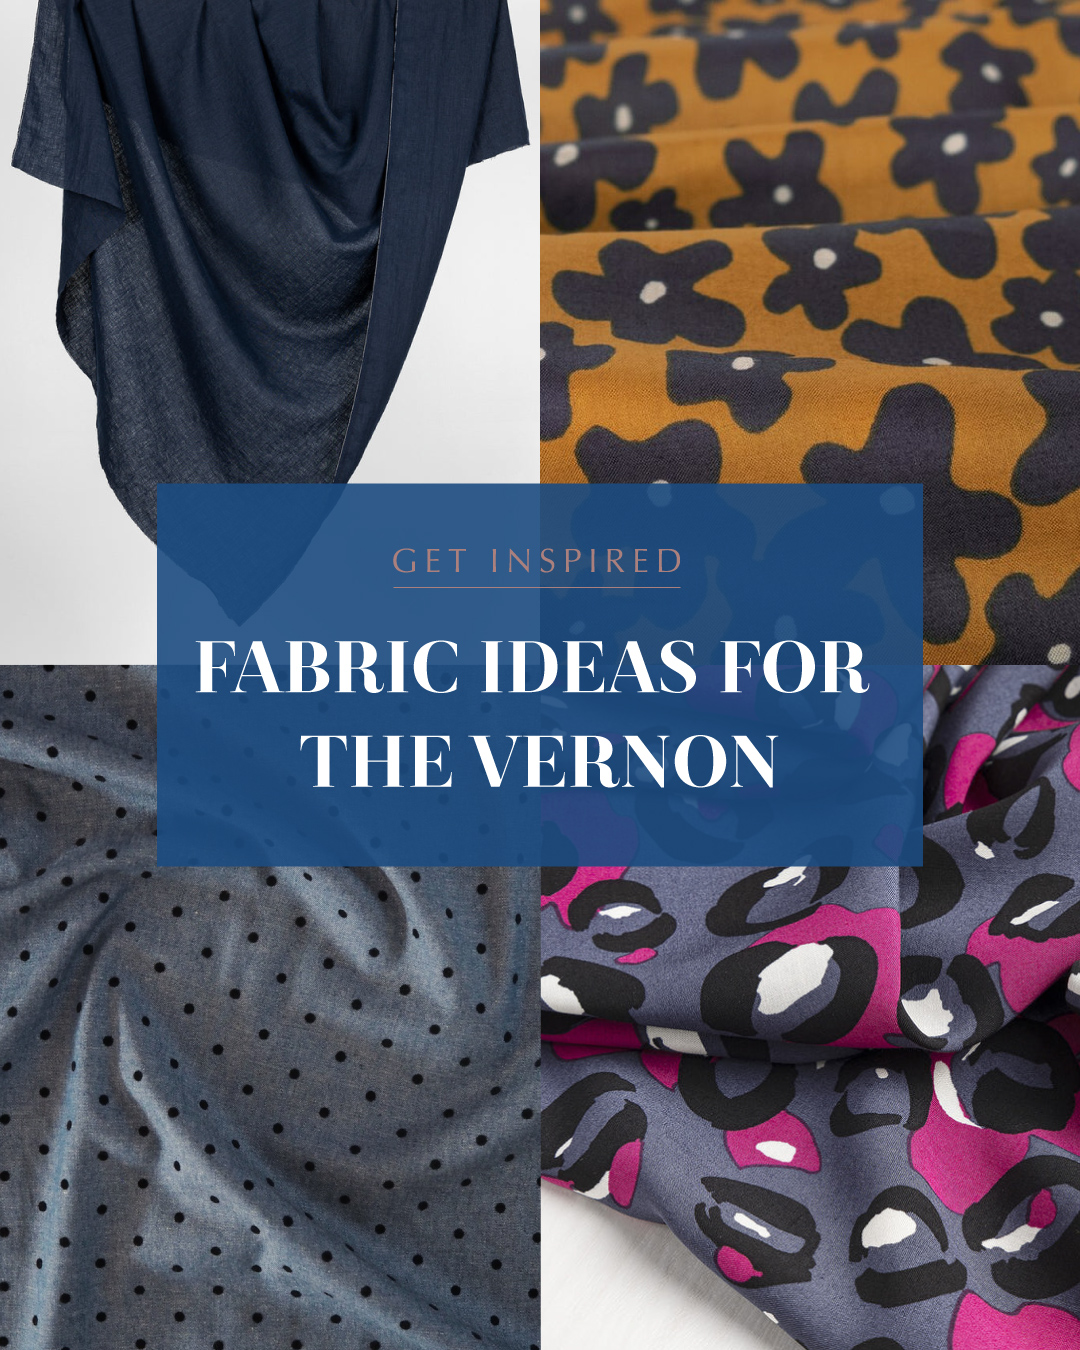 Fabric ideas for the Vernon Shirt